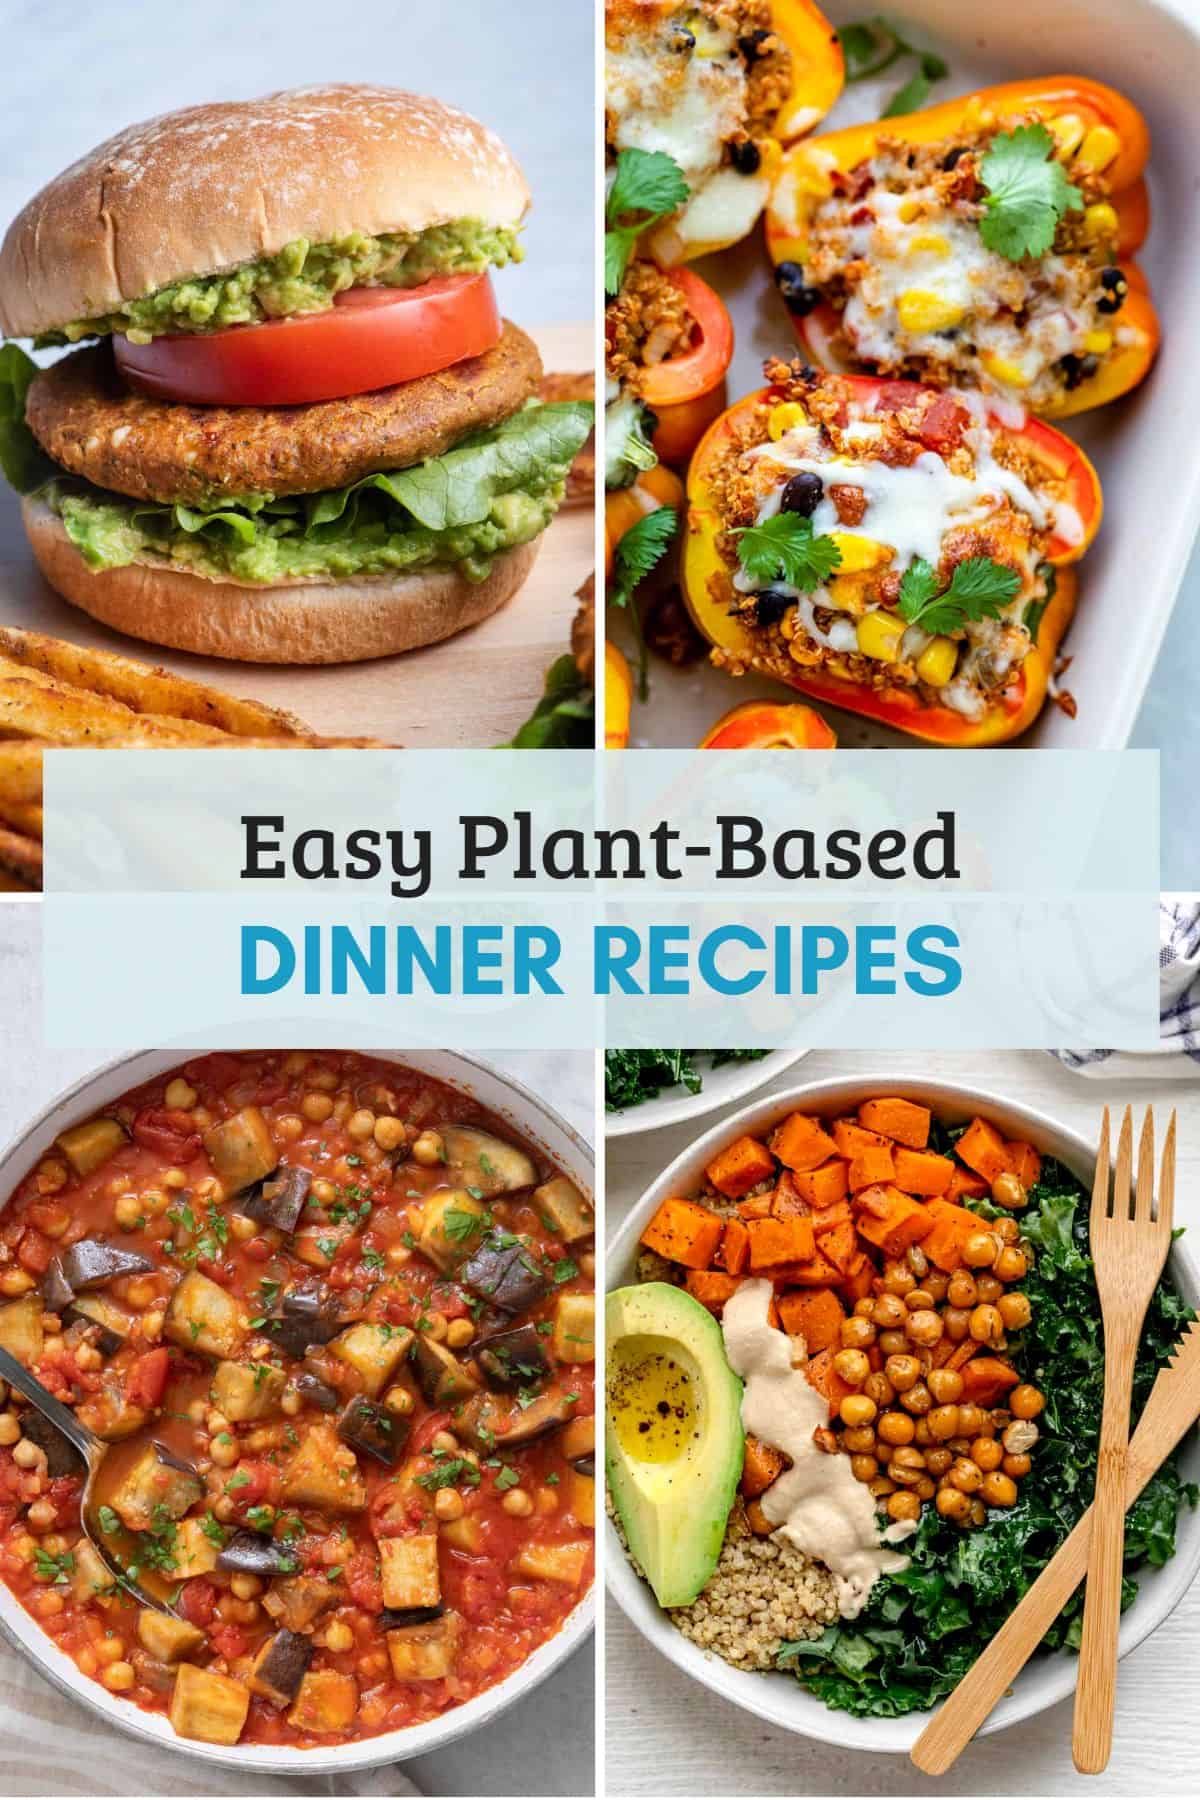 Plant-based recipes